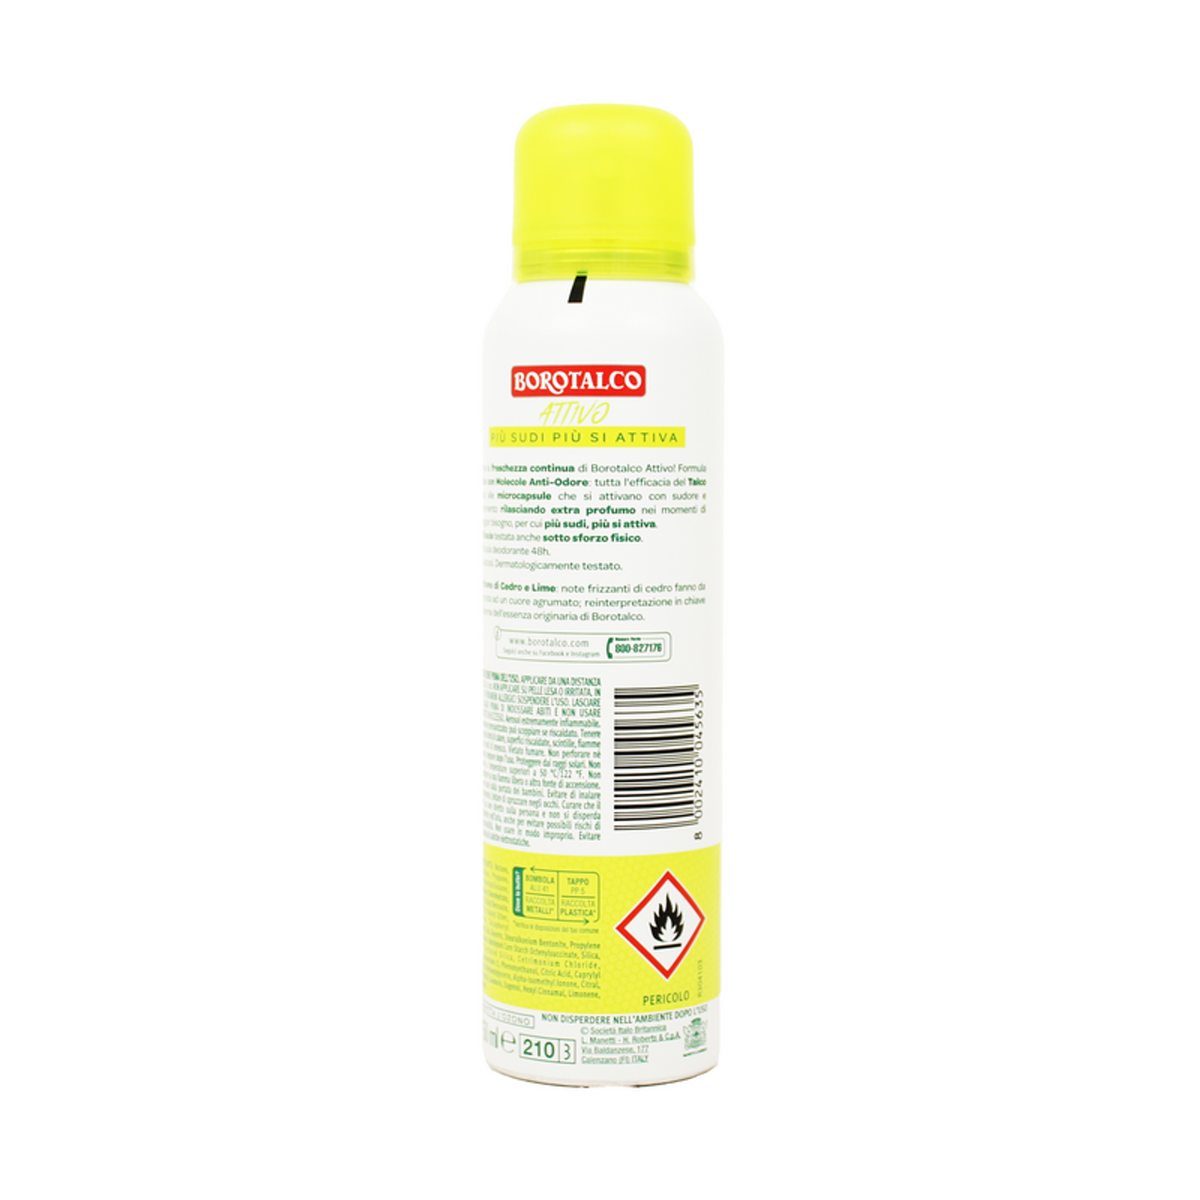 Active borotalco deodorant spray scent of cedar and lime 150 ml